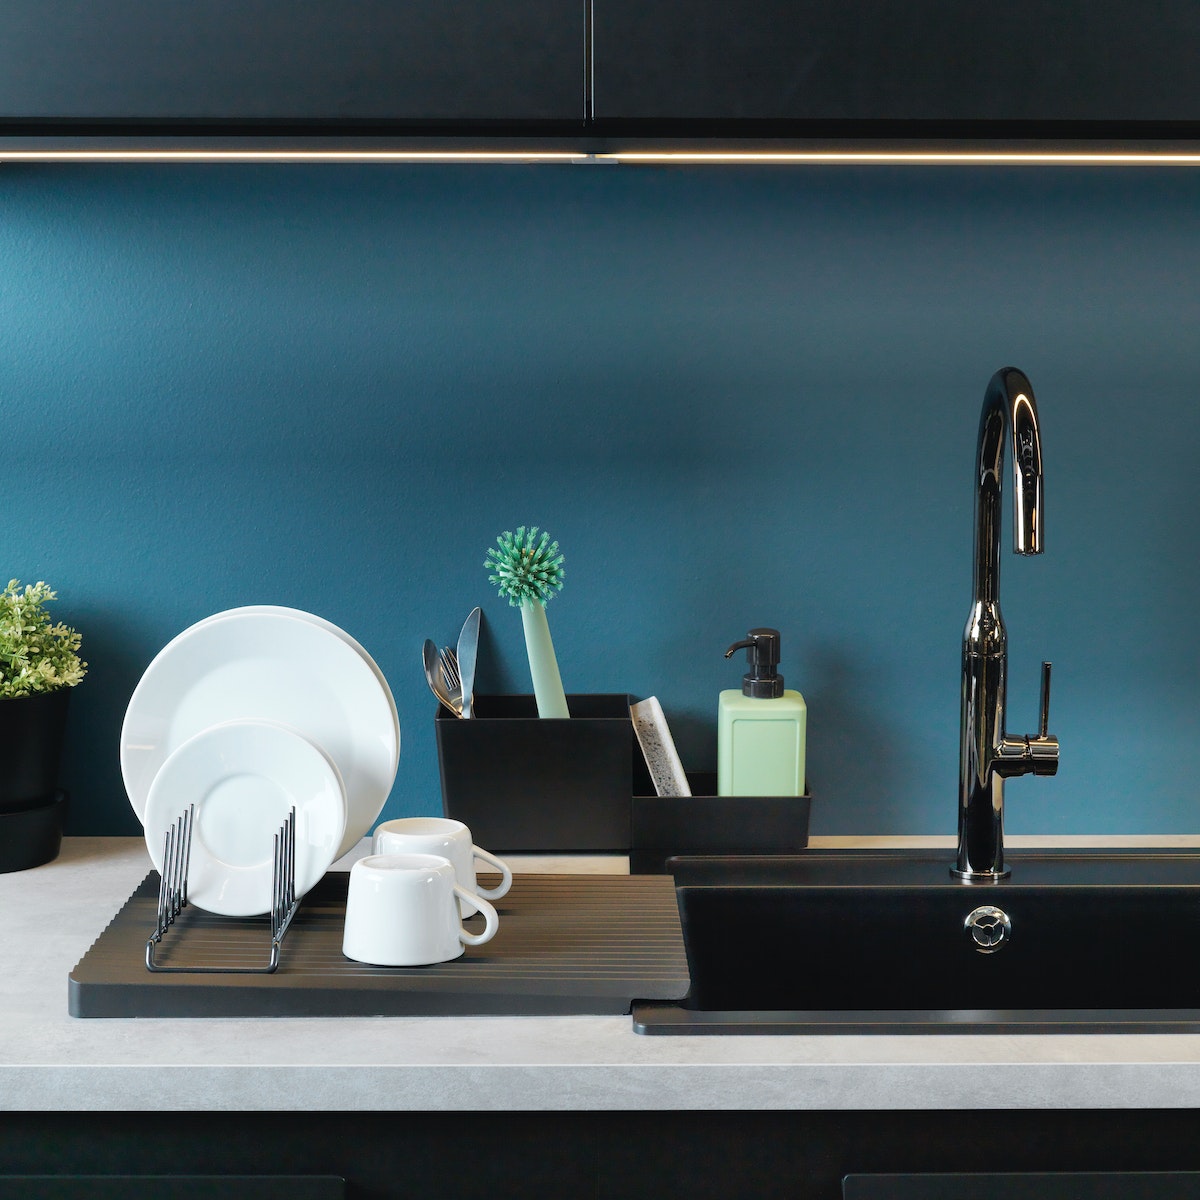 VIDEVECKMAL Dish brush with soap dispenser, bright green - IKEA